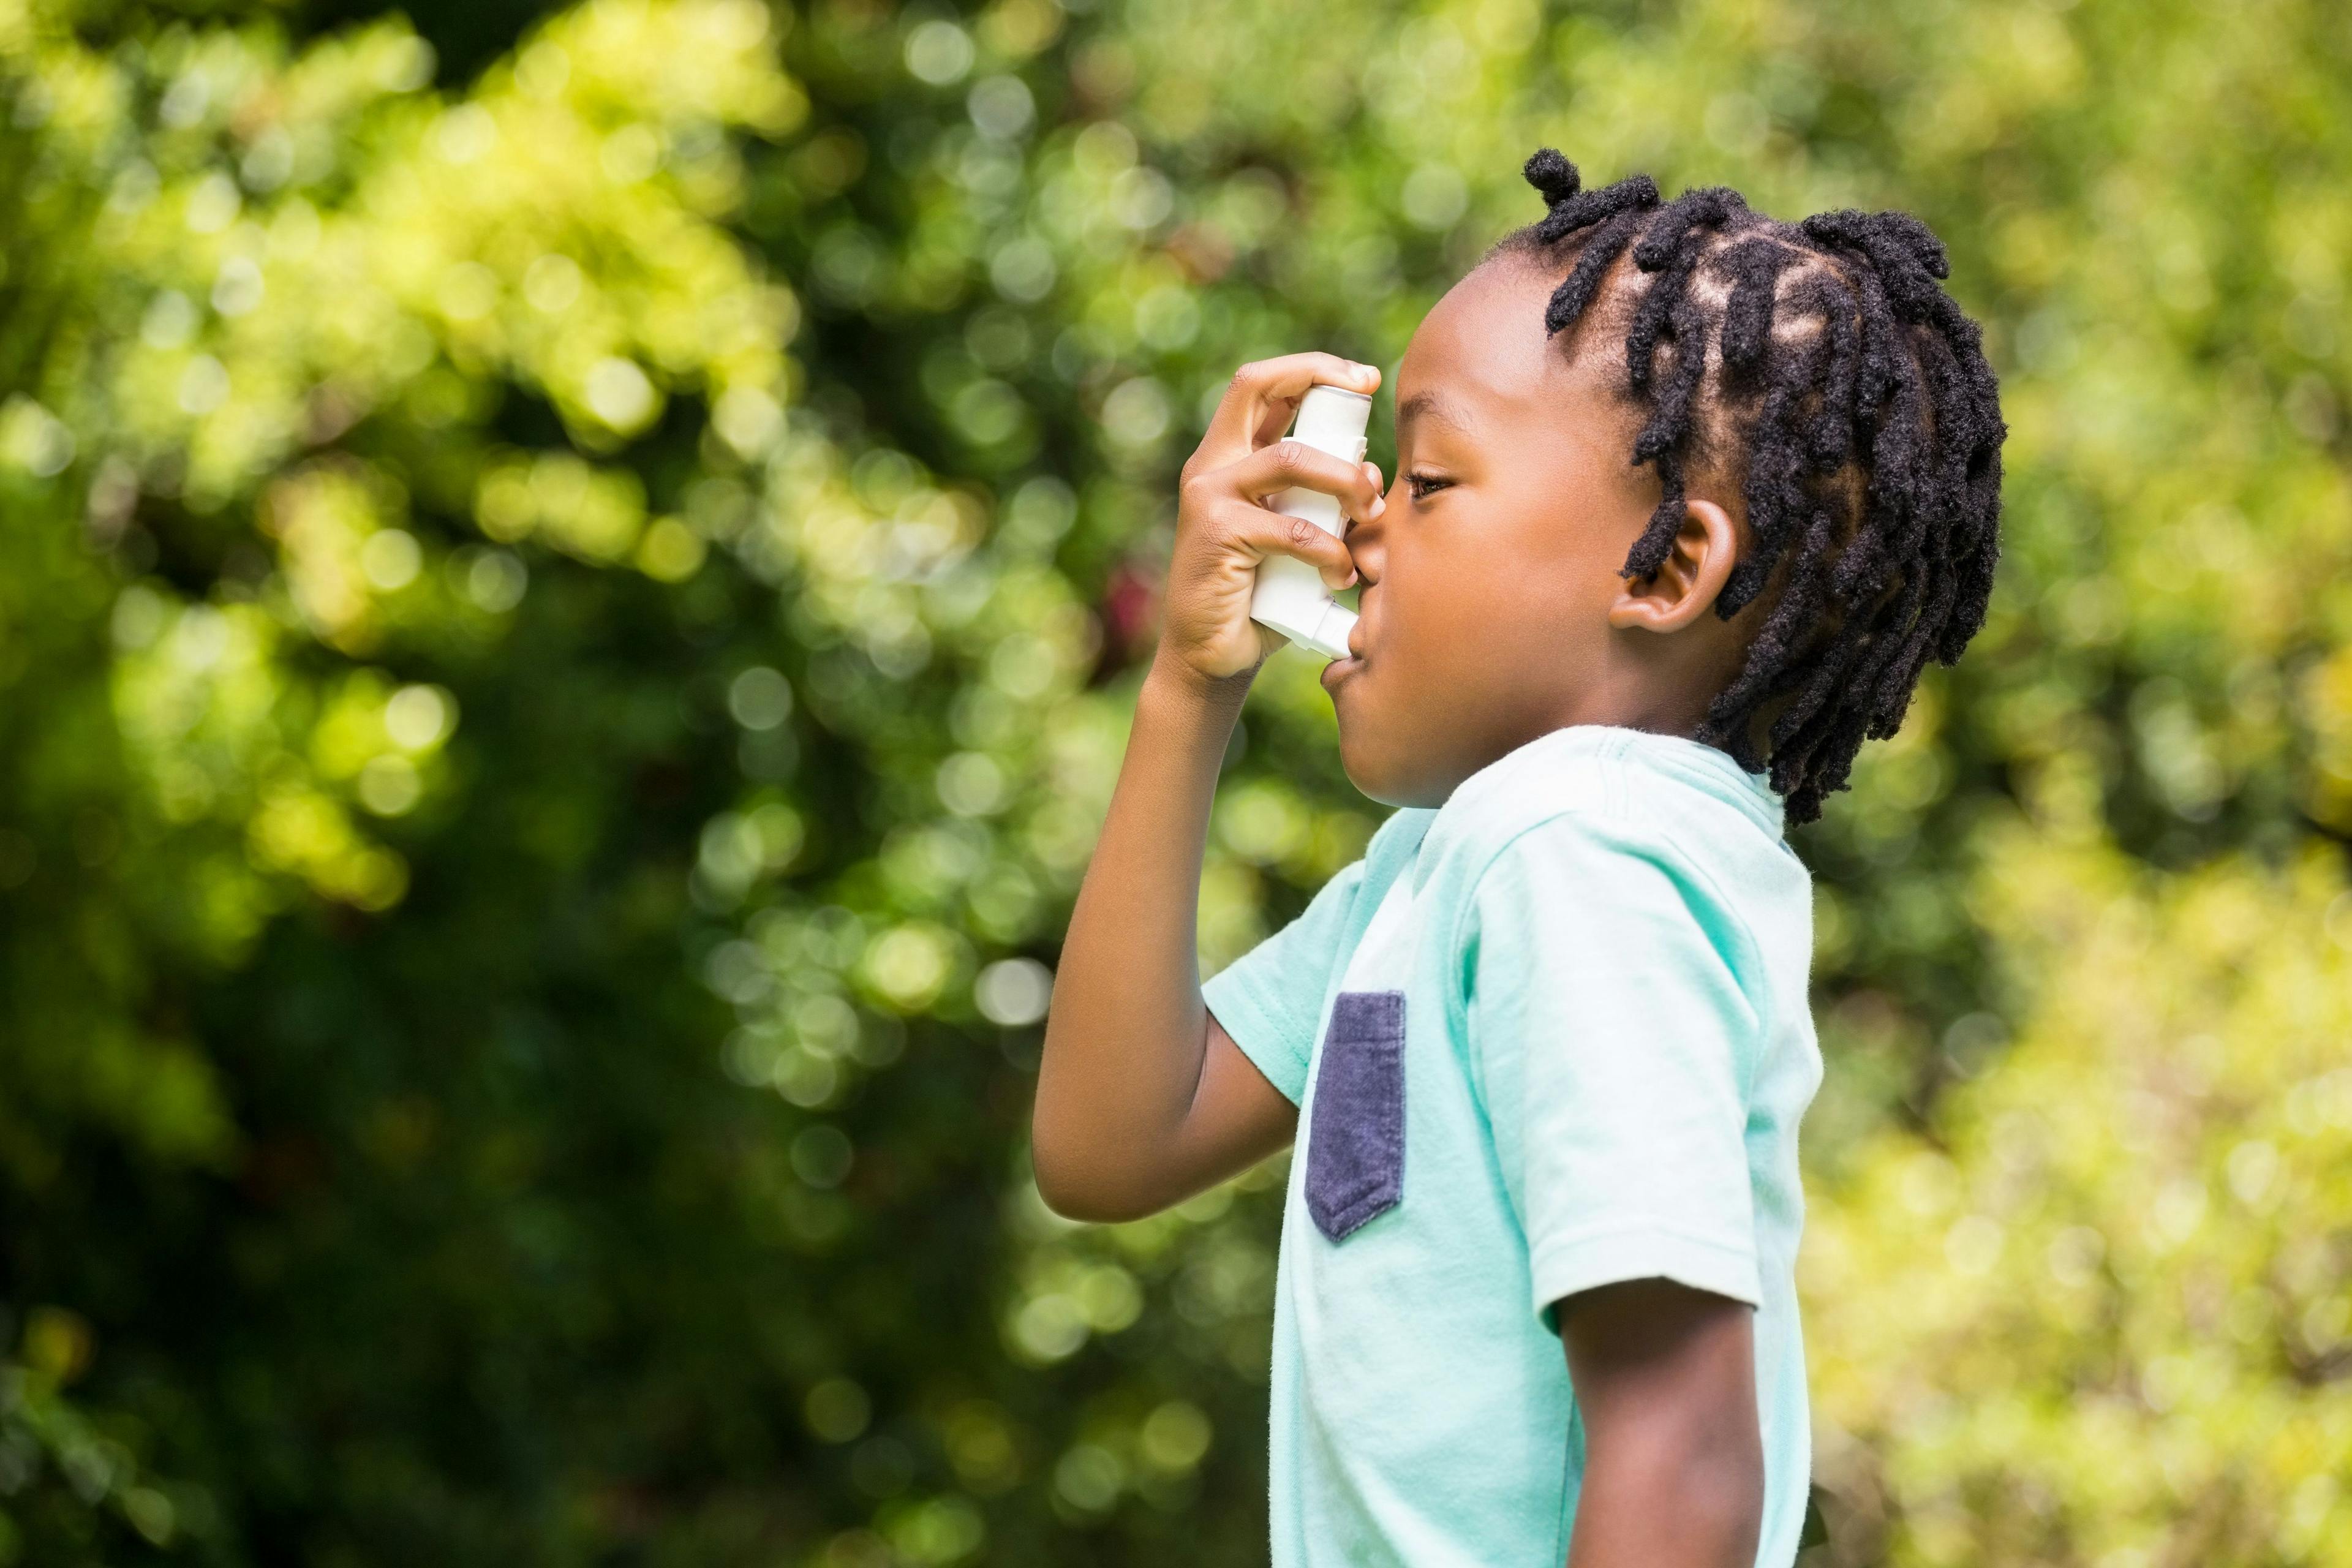 Boy using an asthma inhaler | Image Credit:WavebreakmediaMicro - stock.adobe.com